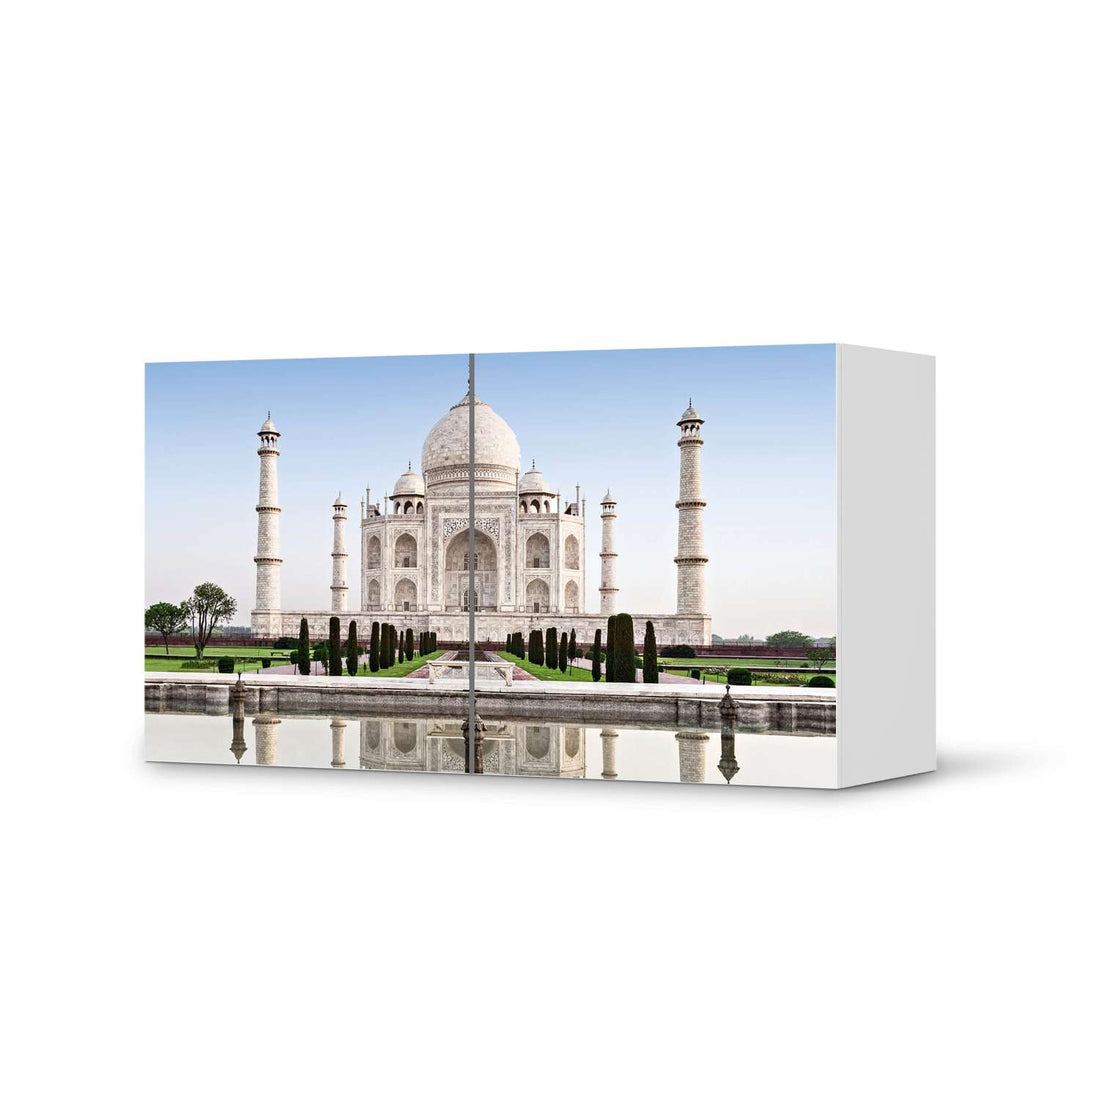 Folie für Möbel Taj Mahal - IKEA Besta Regal Quer 2 Türen  - weiss